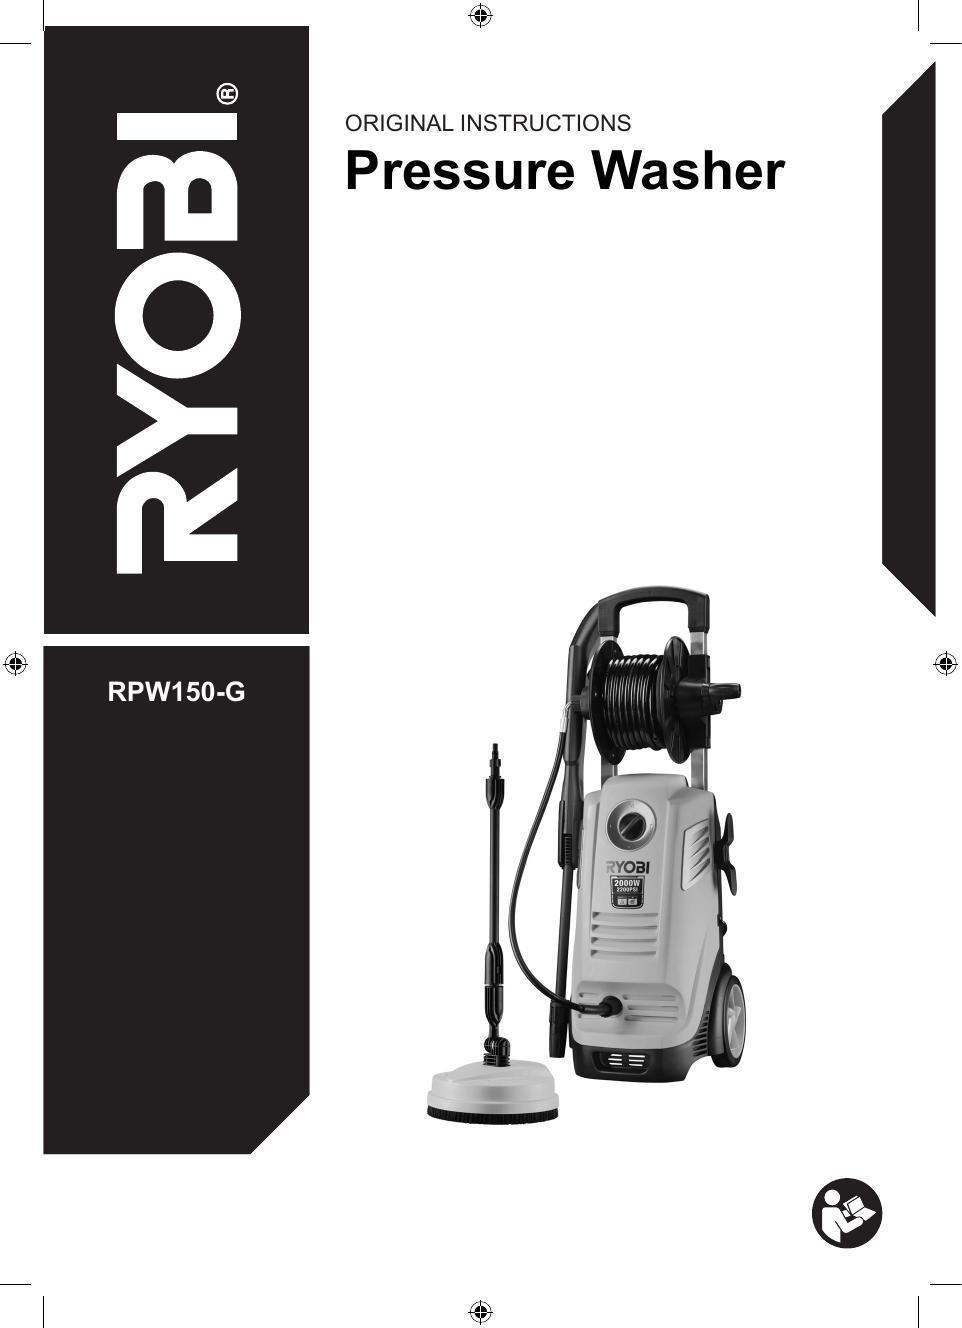 ryobi-rpw15o-g-pressure-washer-user-manual.pdf